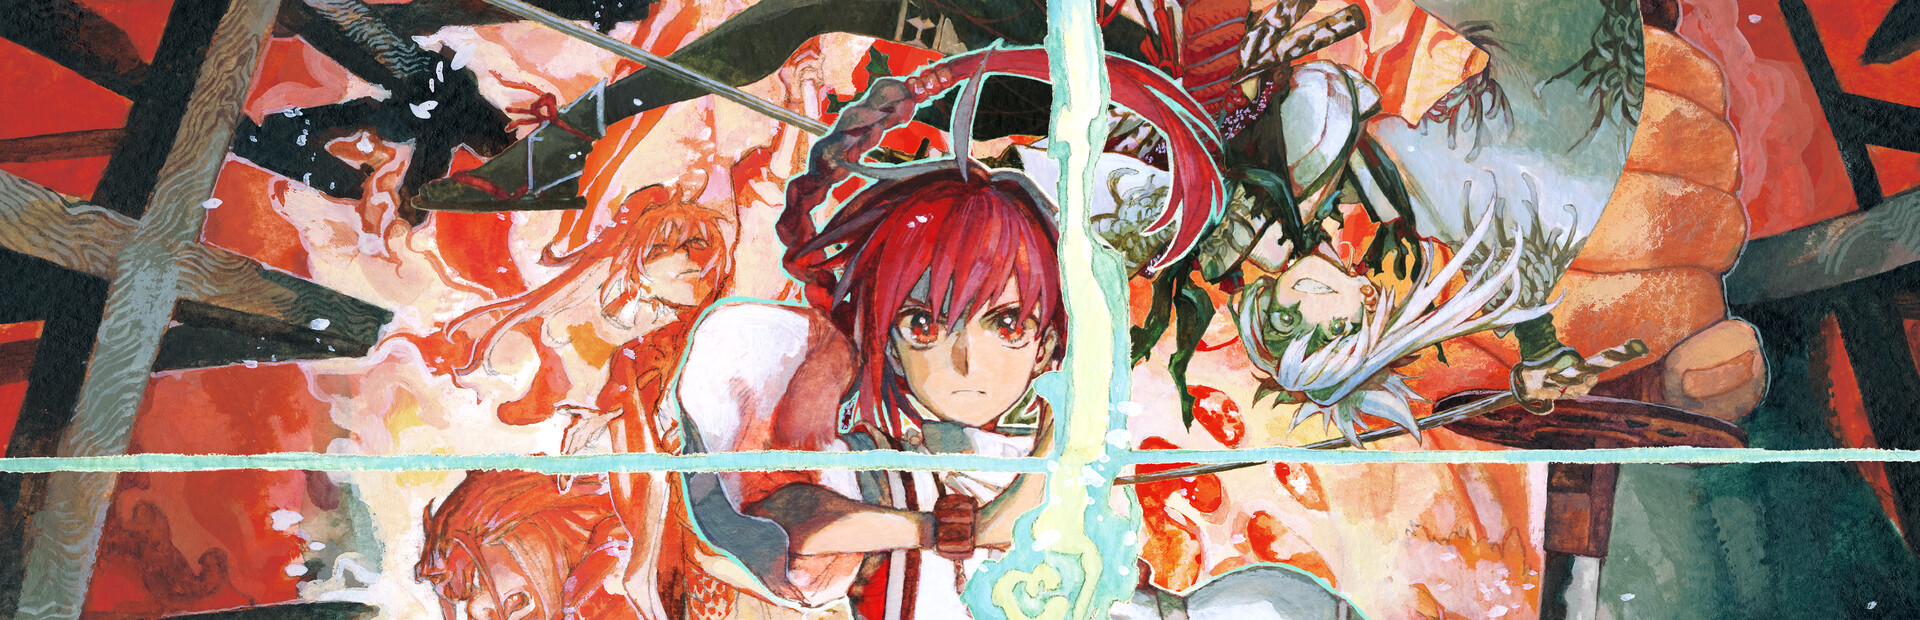 Fate/Samurai Remnant cover image